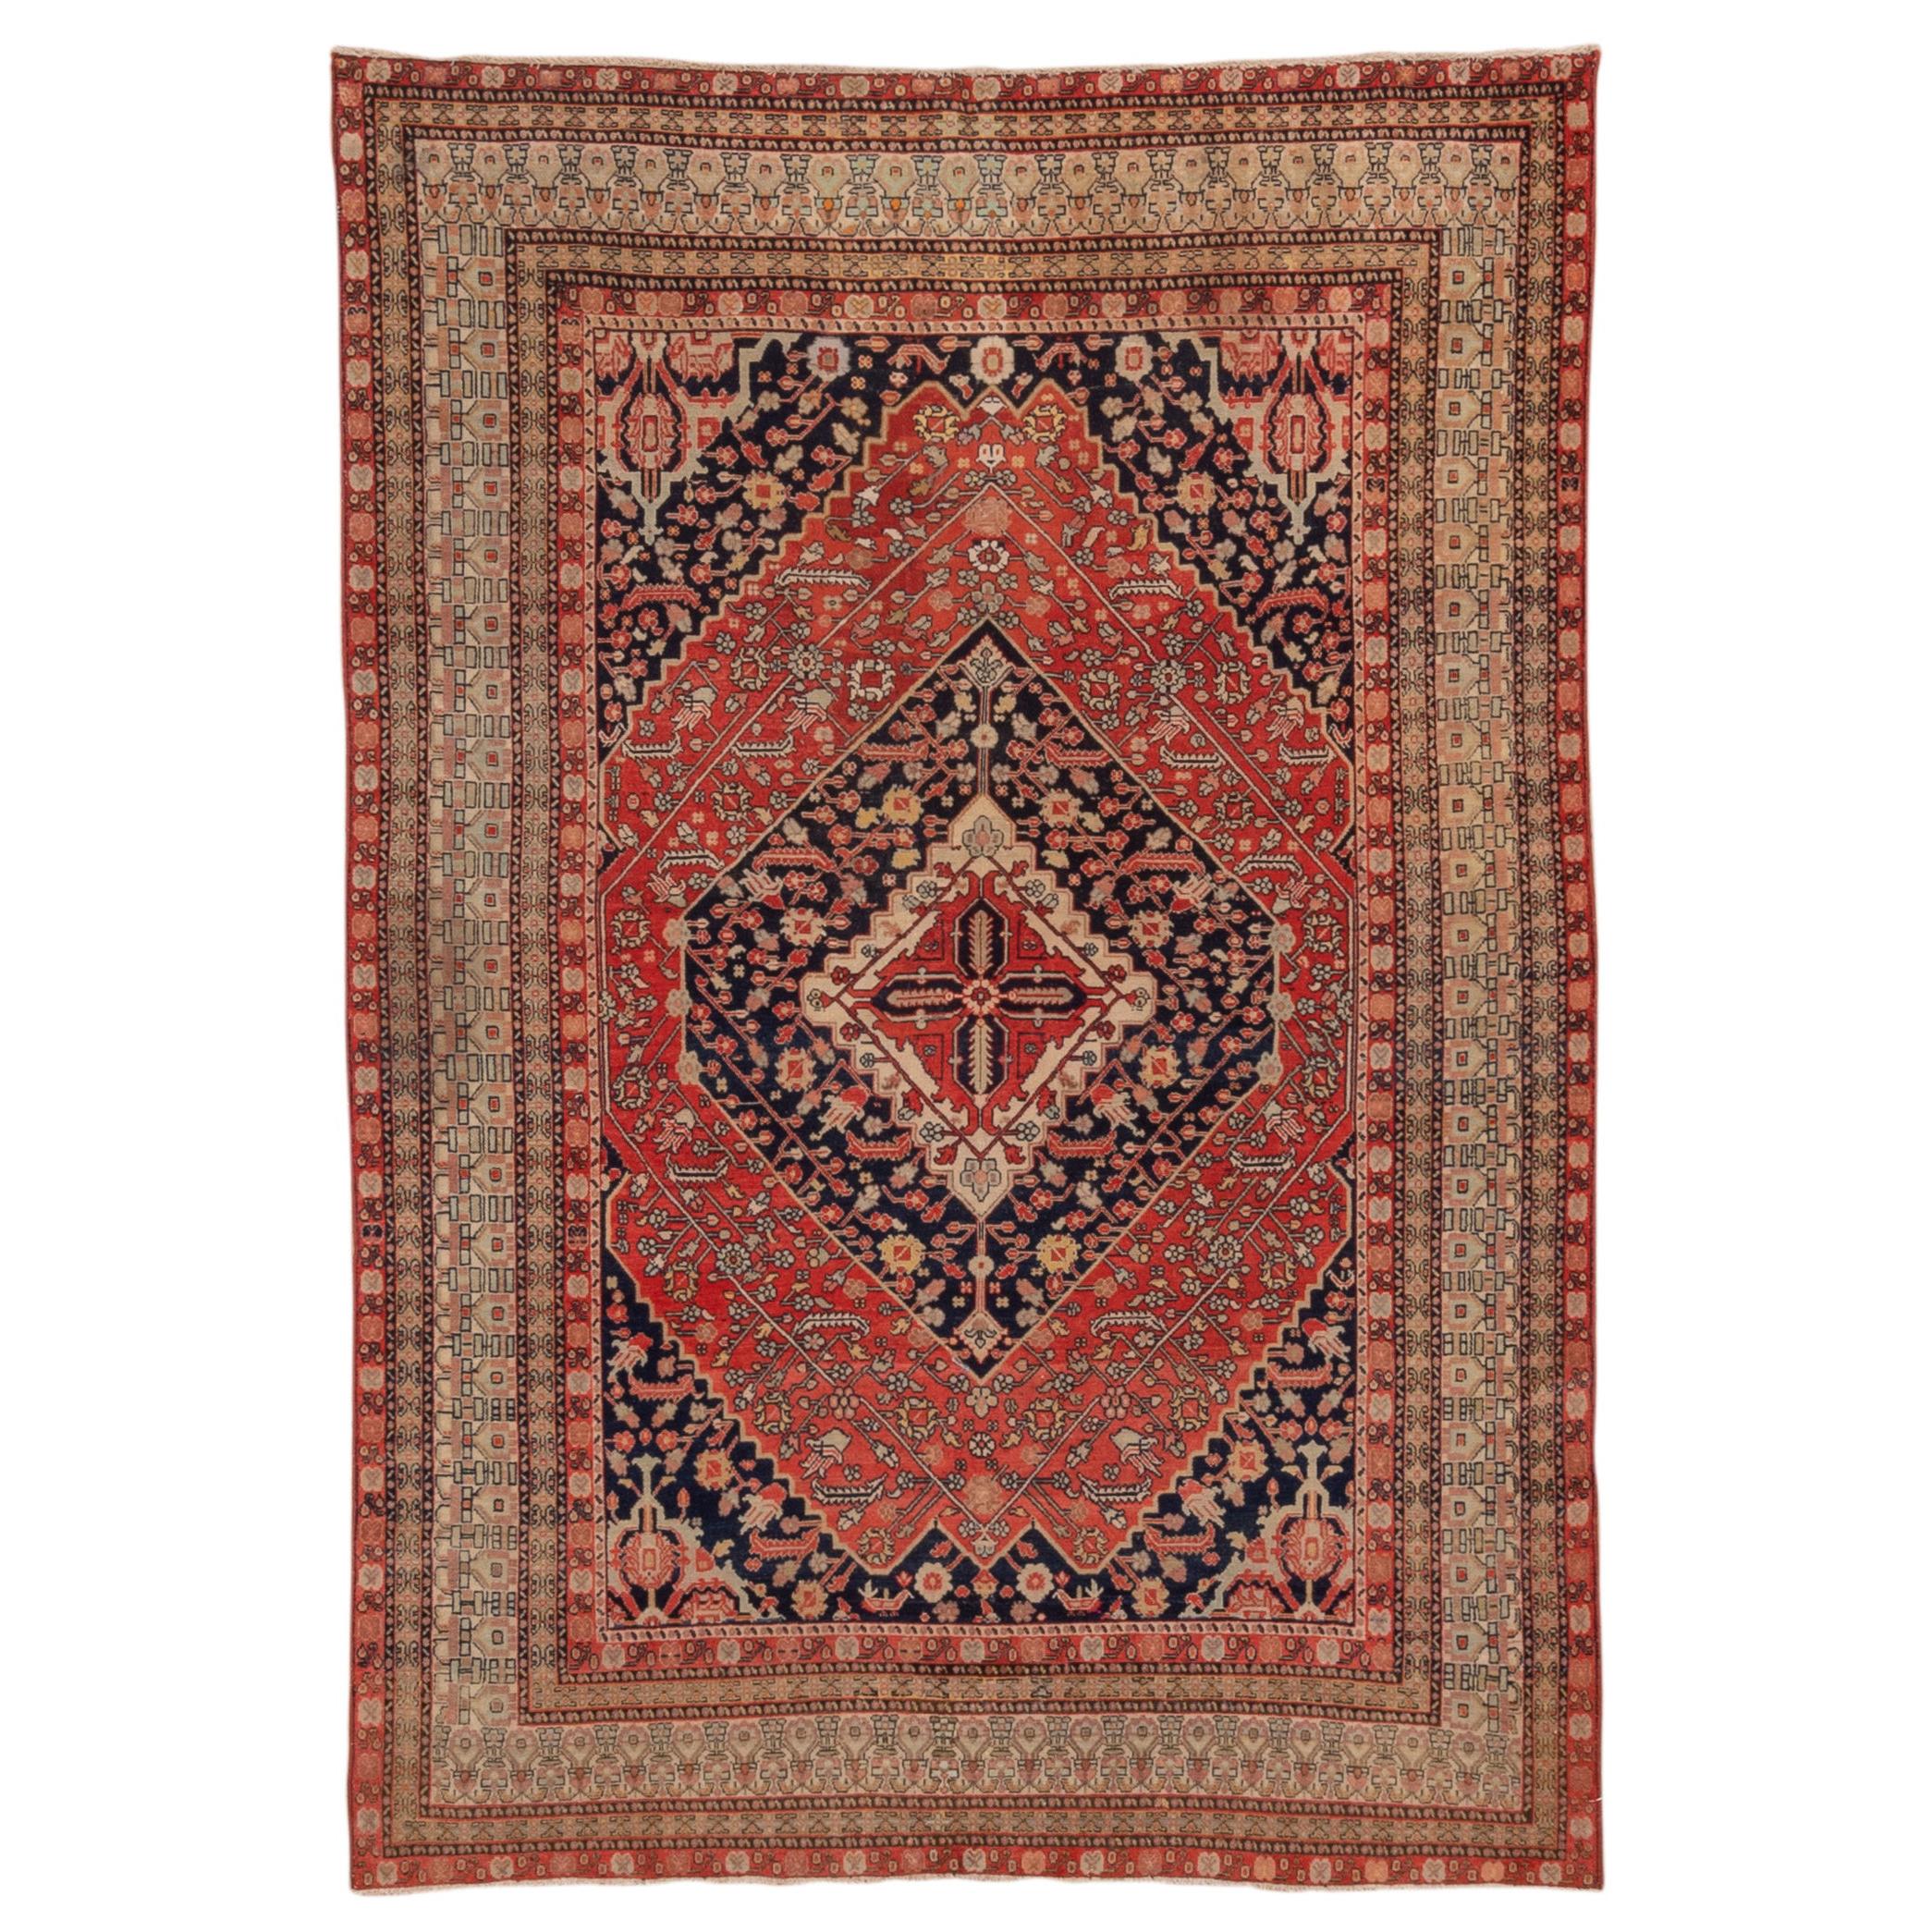 Rare Antique Persian Senneh Rug, Bright Colors